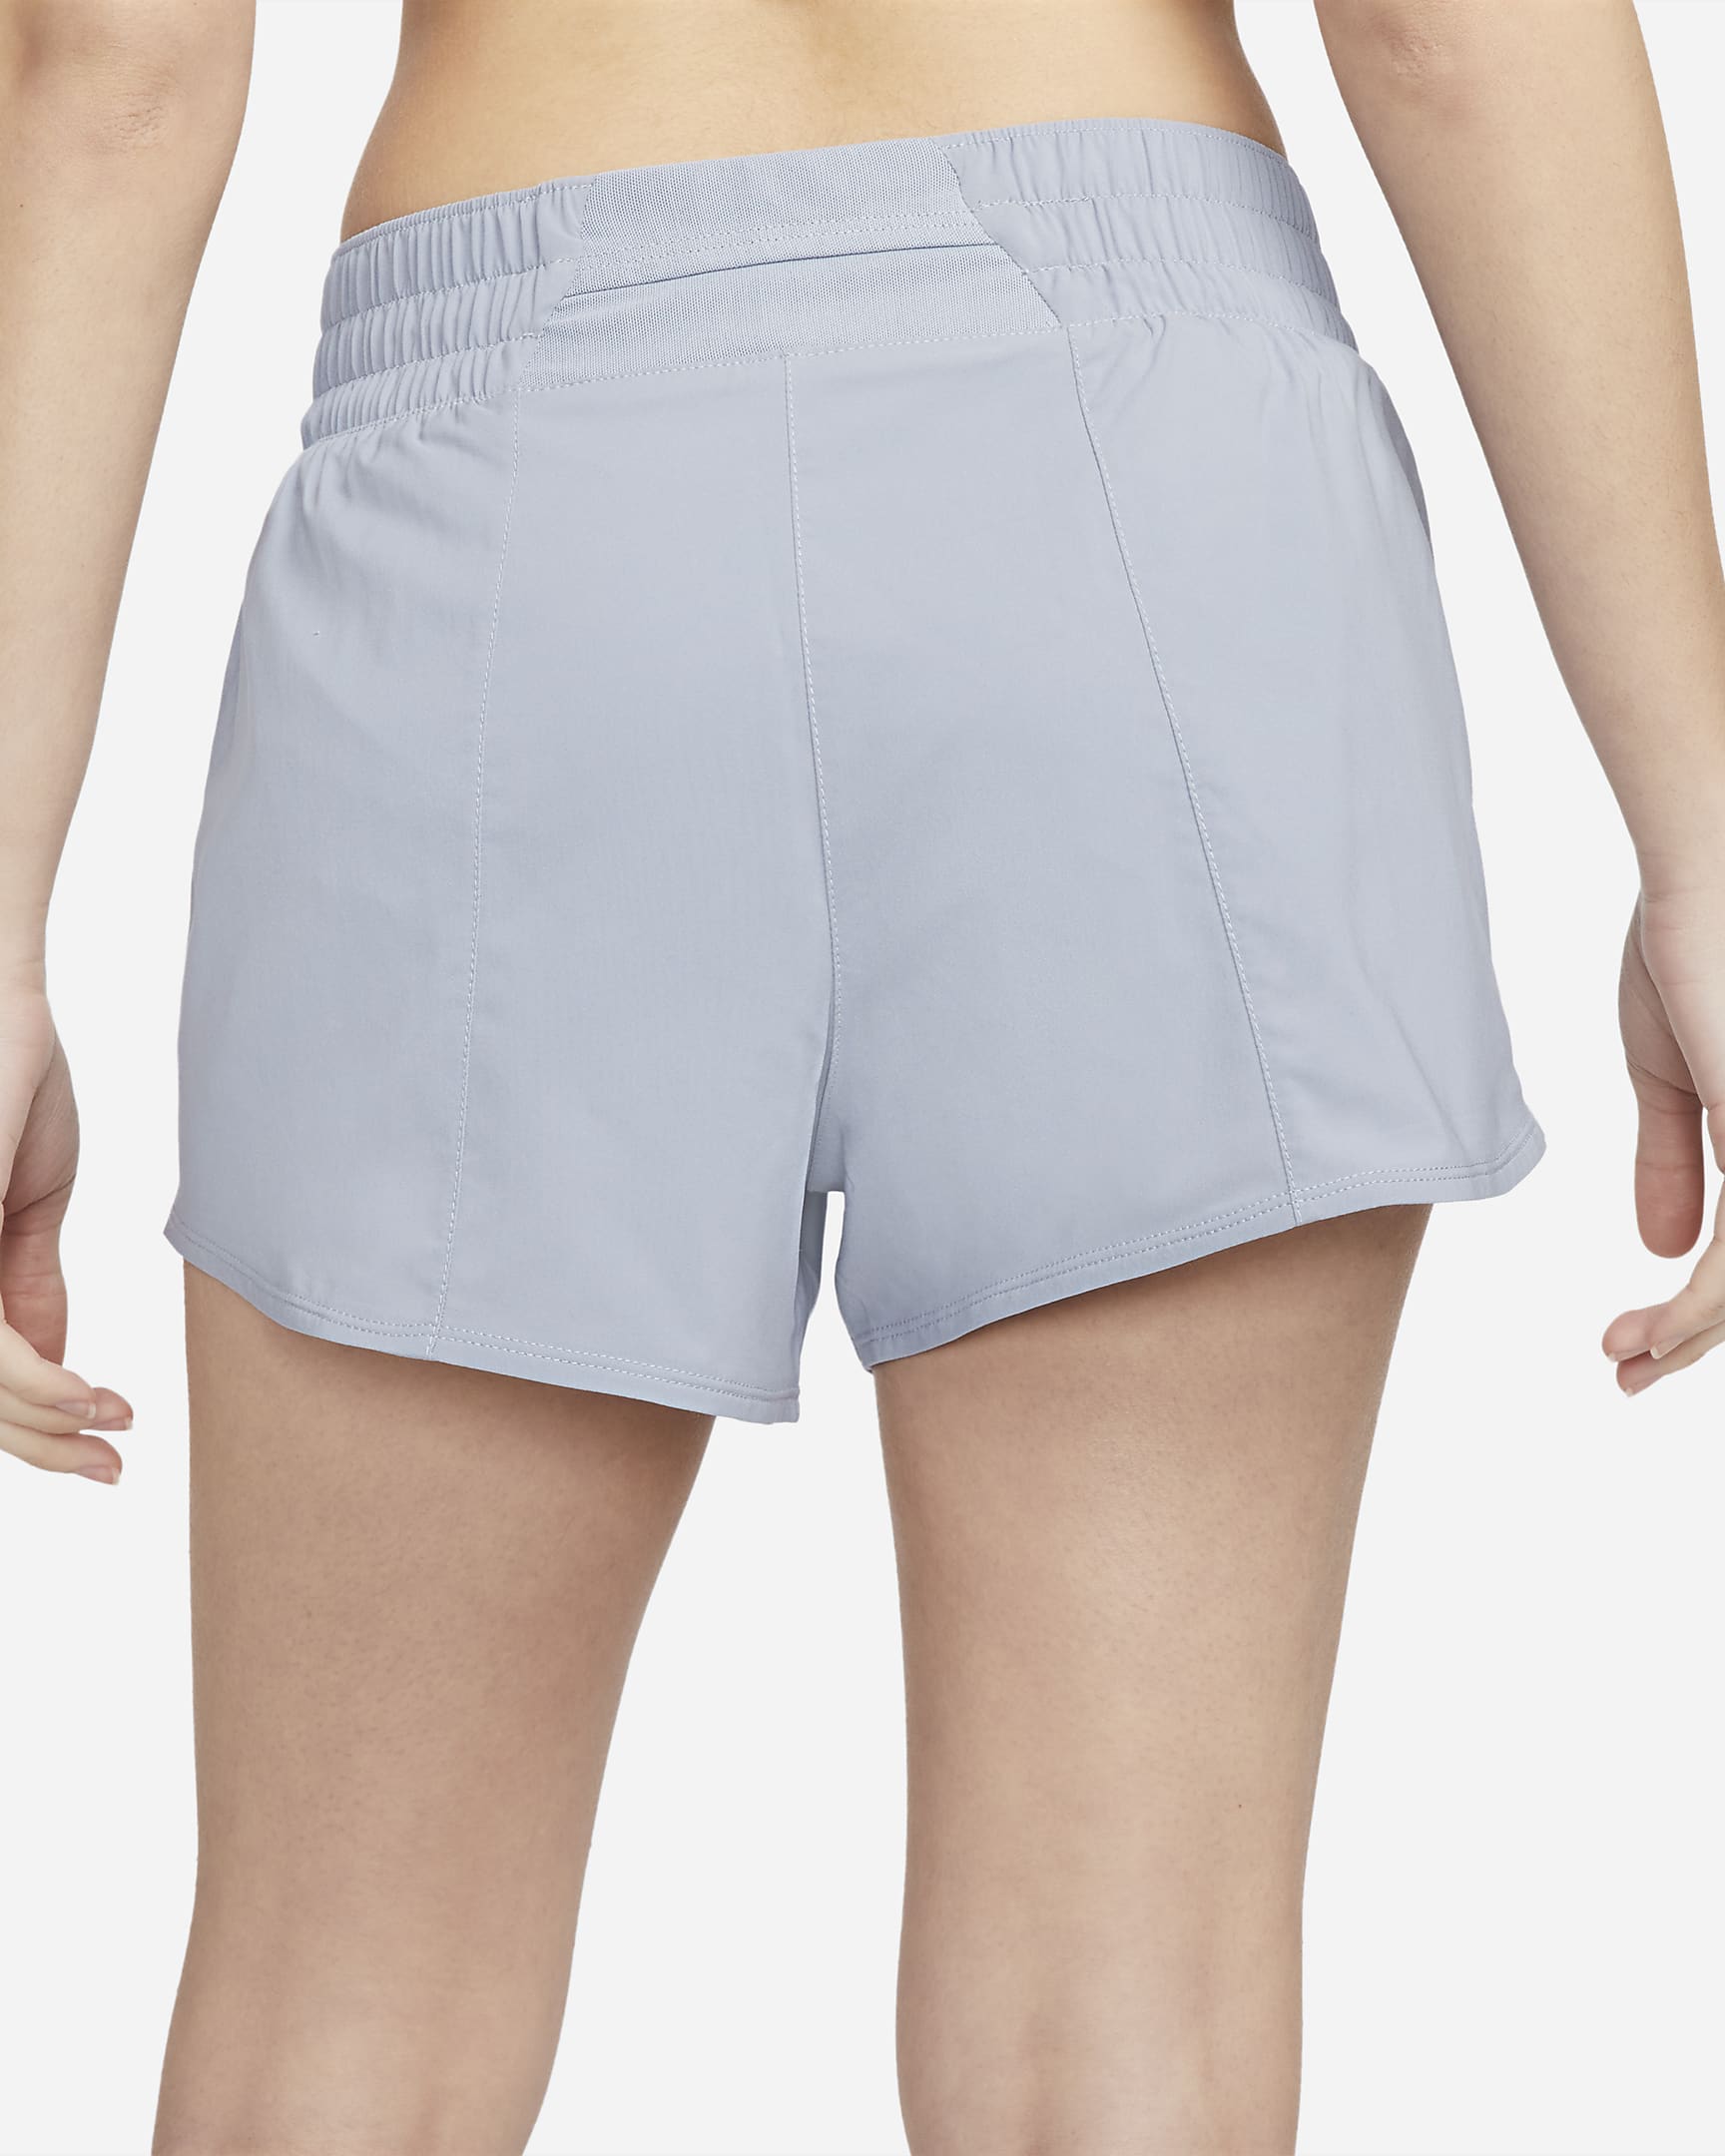 Shorts con forro de ropa interior Dri-FIT de tiro medio de 8 cm para ...